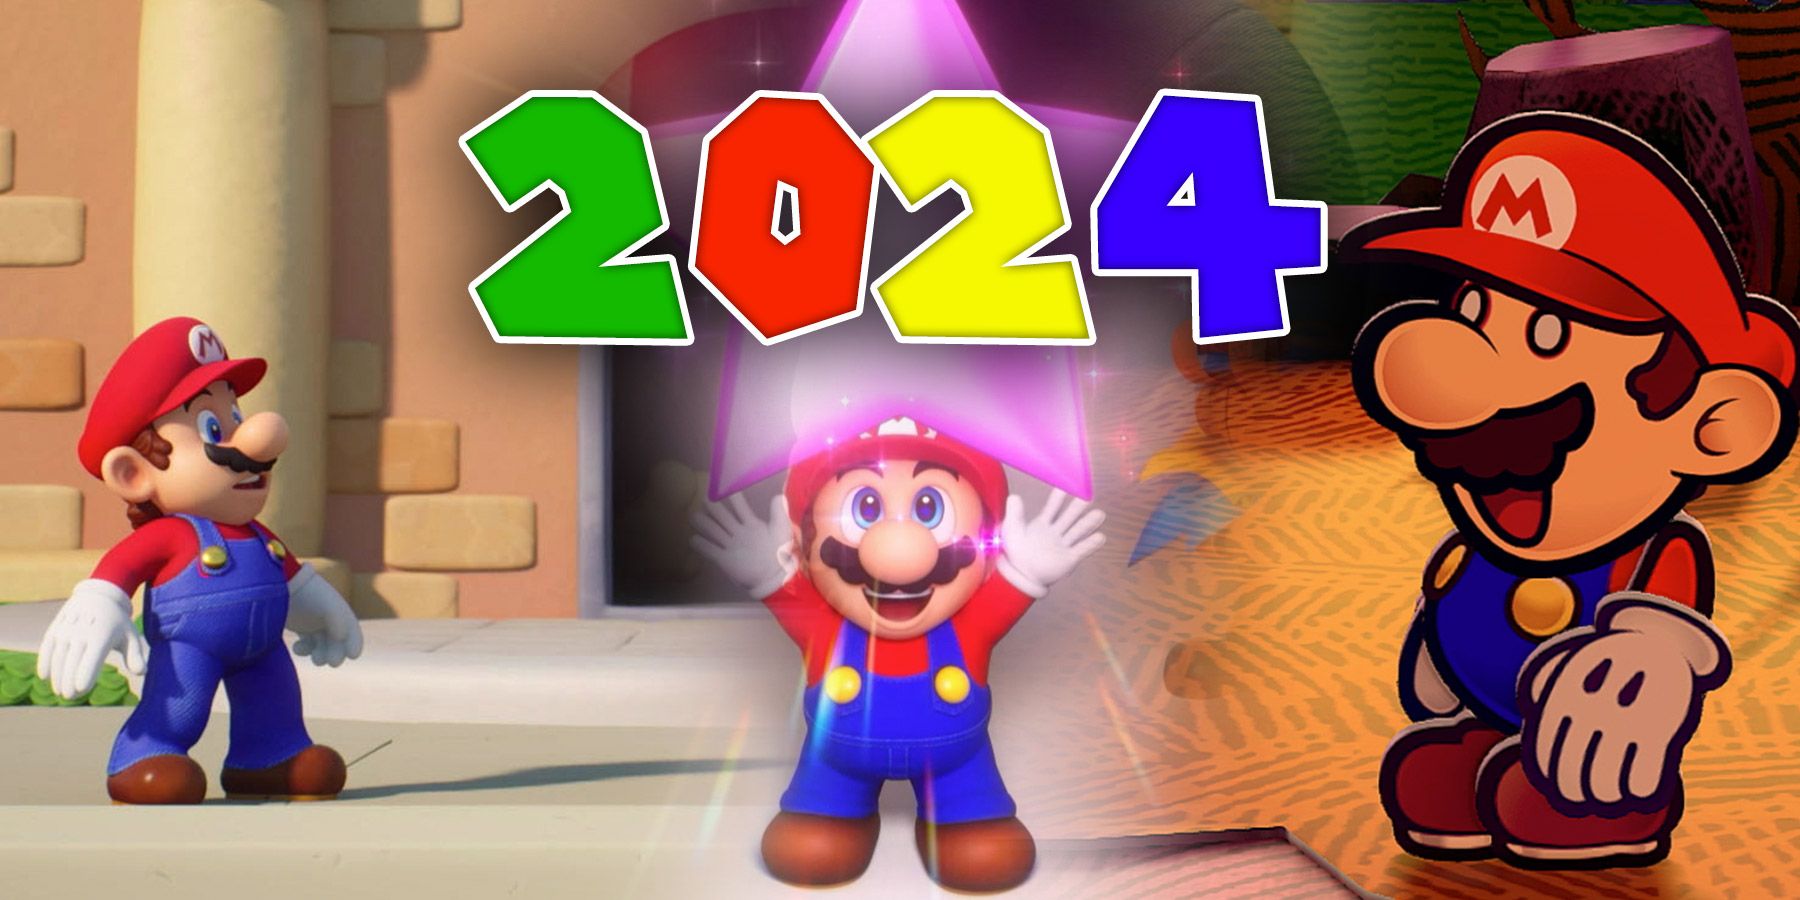 The Super Mario Bros Movie 2 (2024)